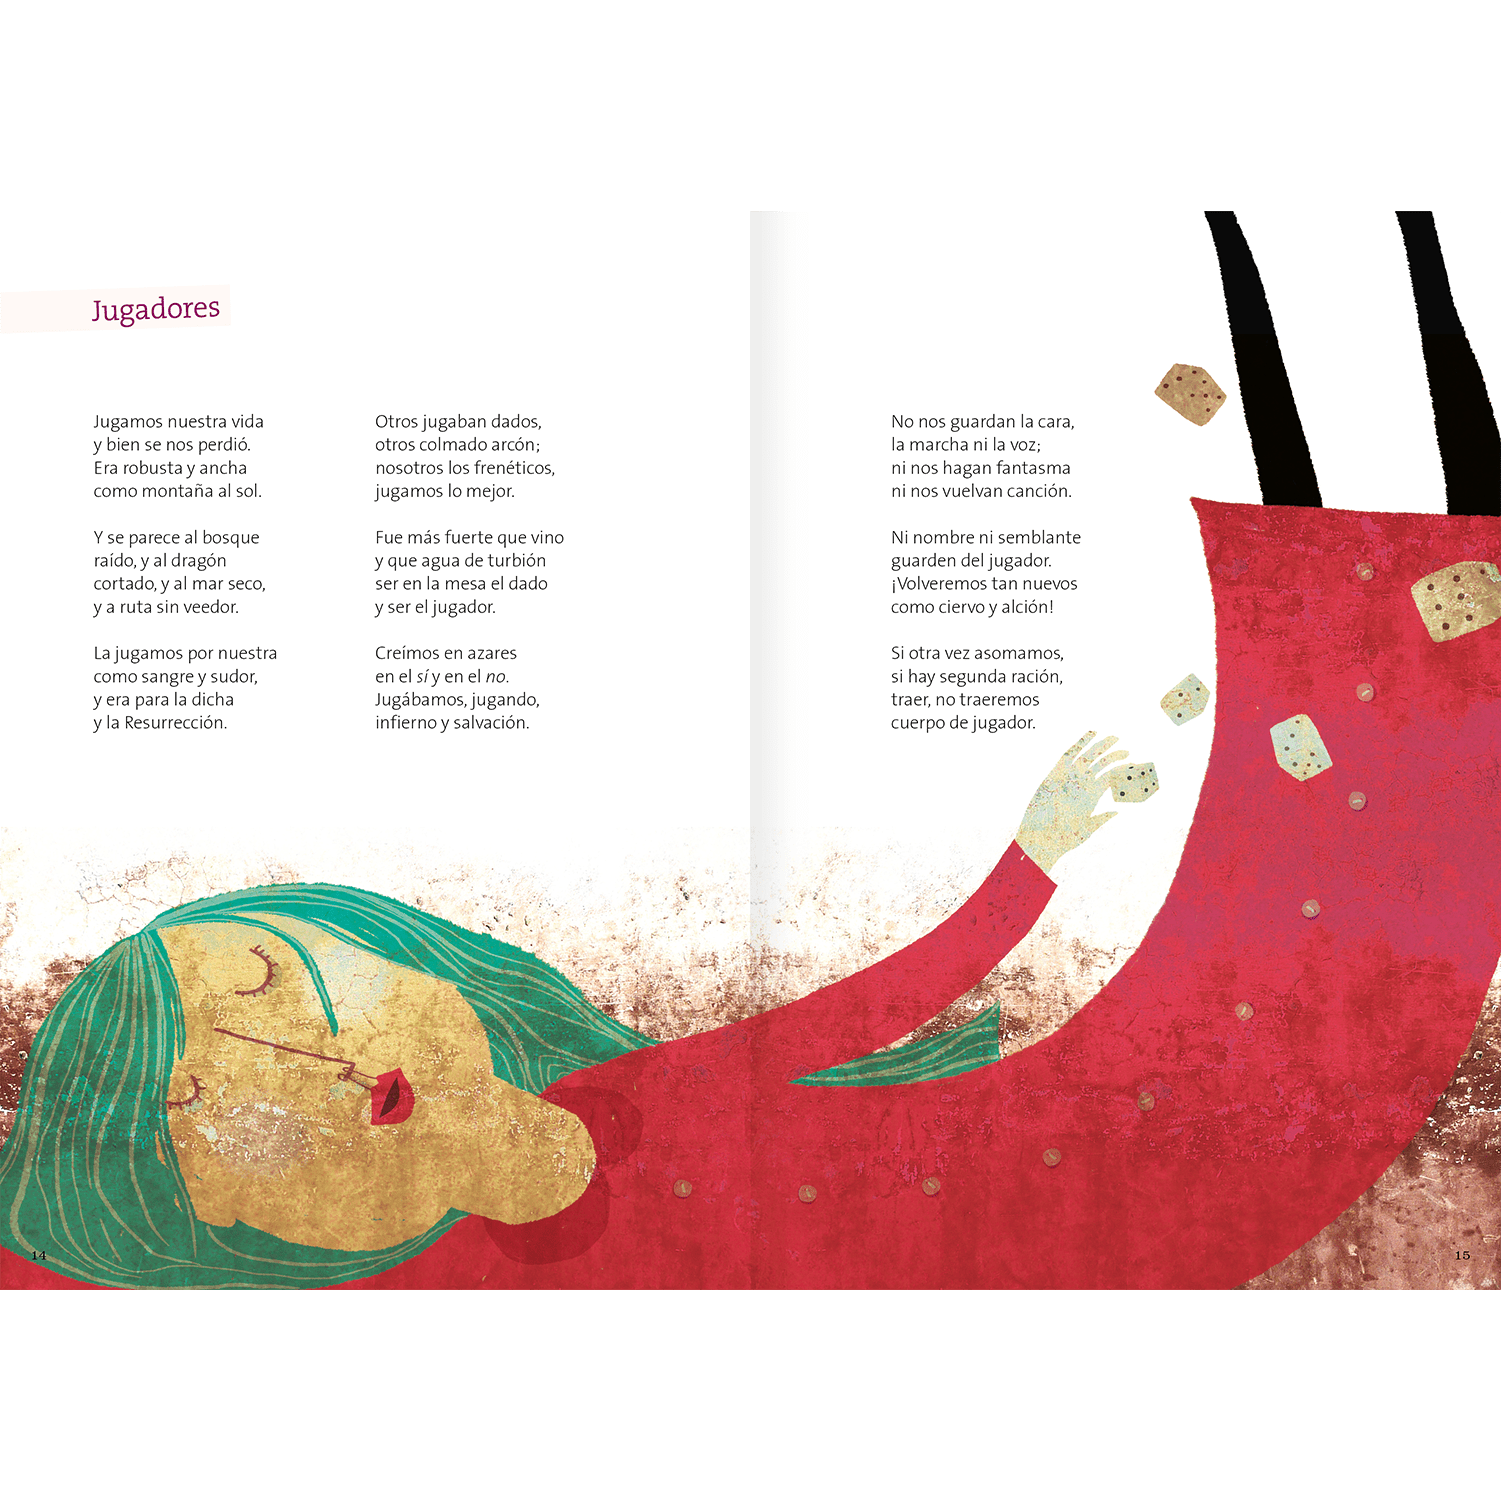 Gabriela Mistral, poemas ilustrados - Amanuta